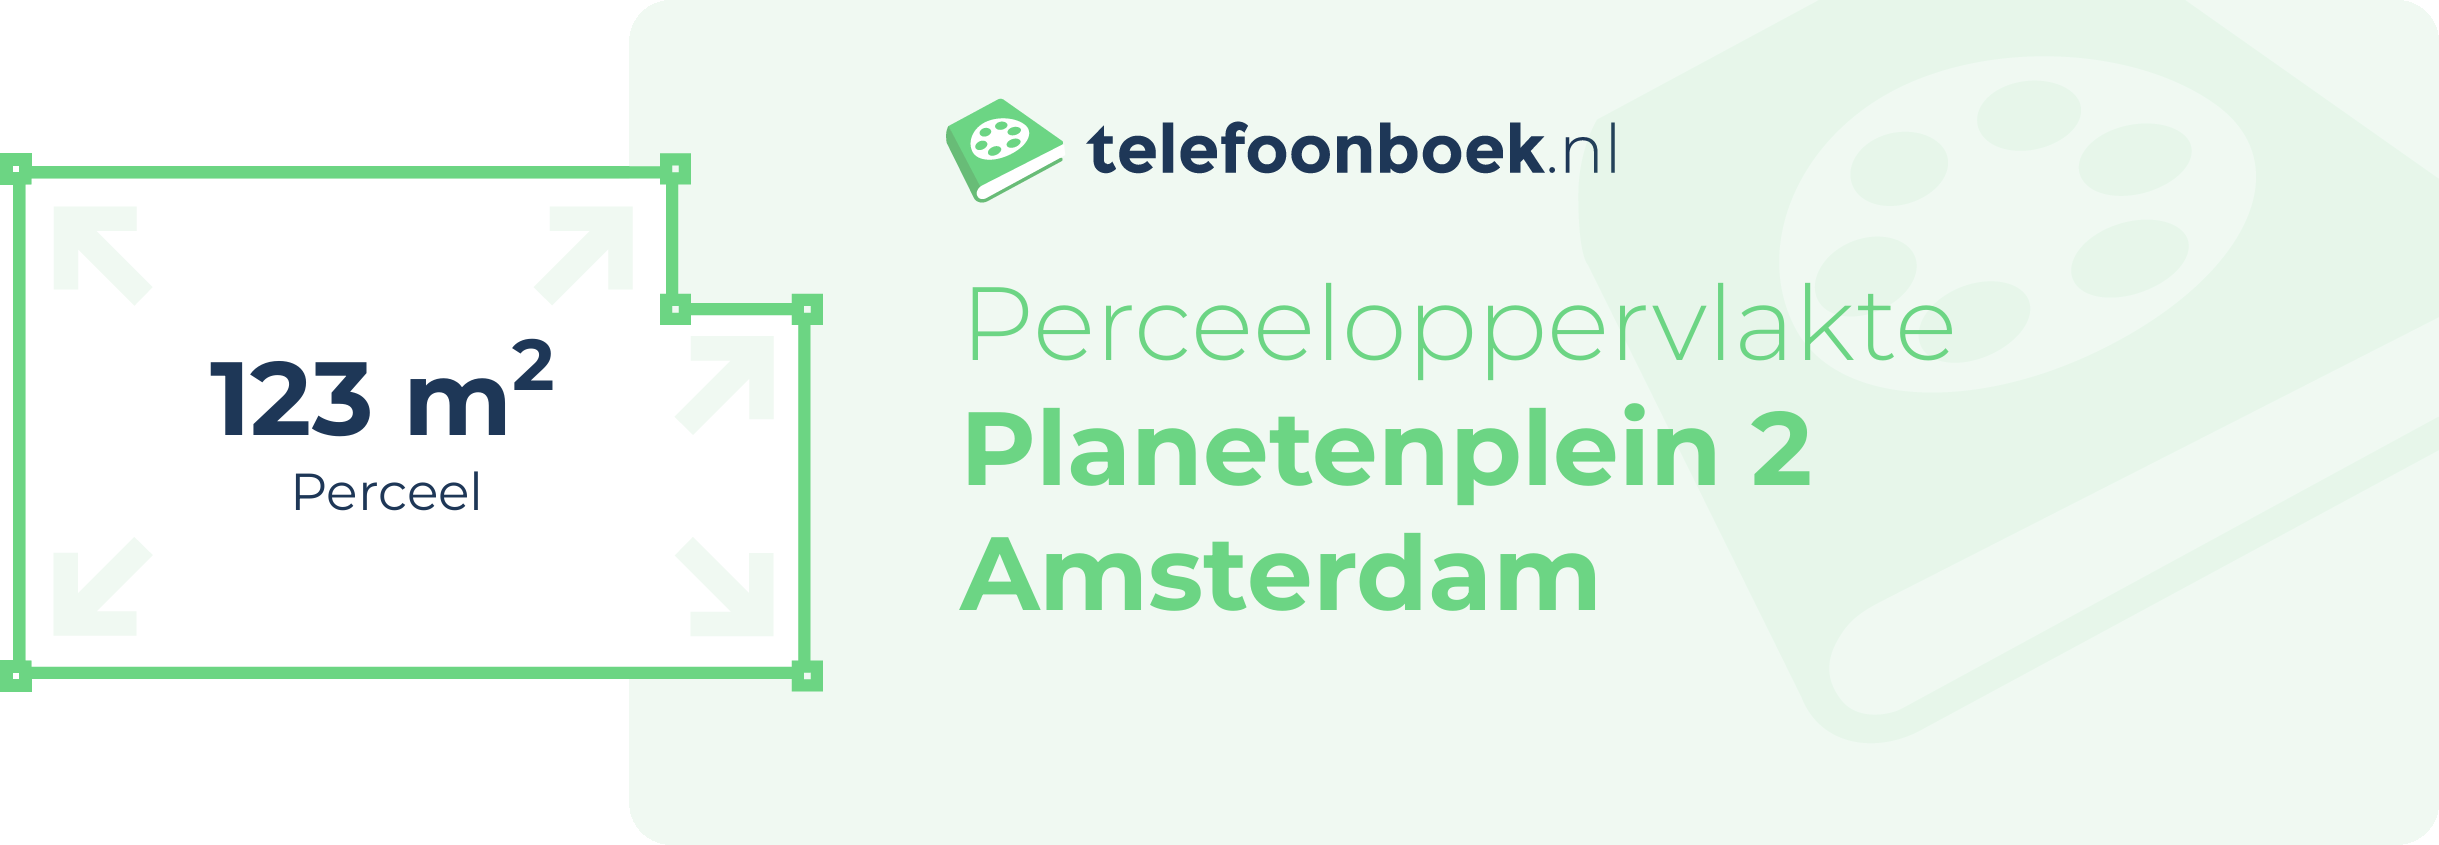 Perceeloppervlakte Planetenplein 2 Amsterdam